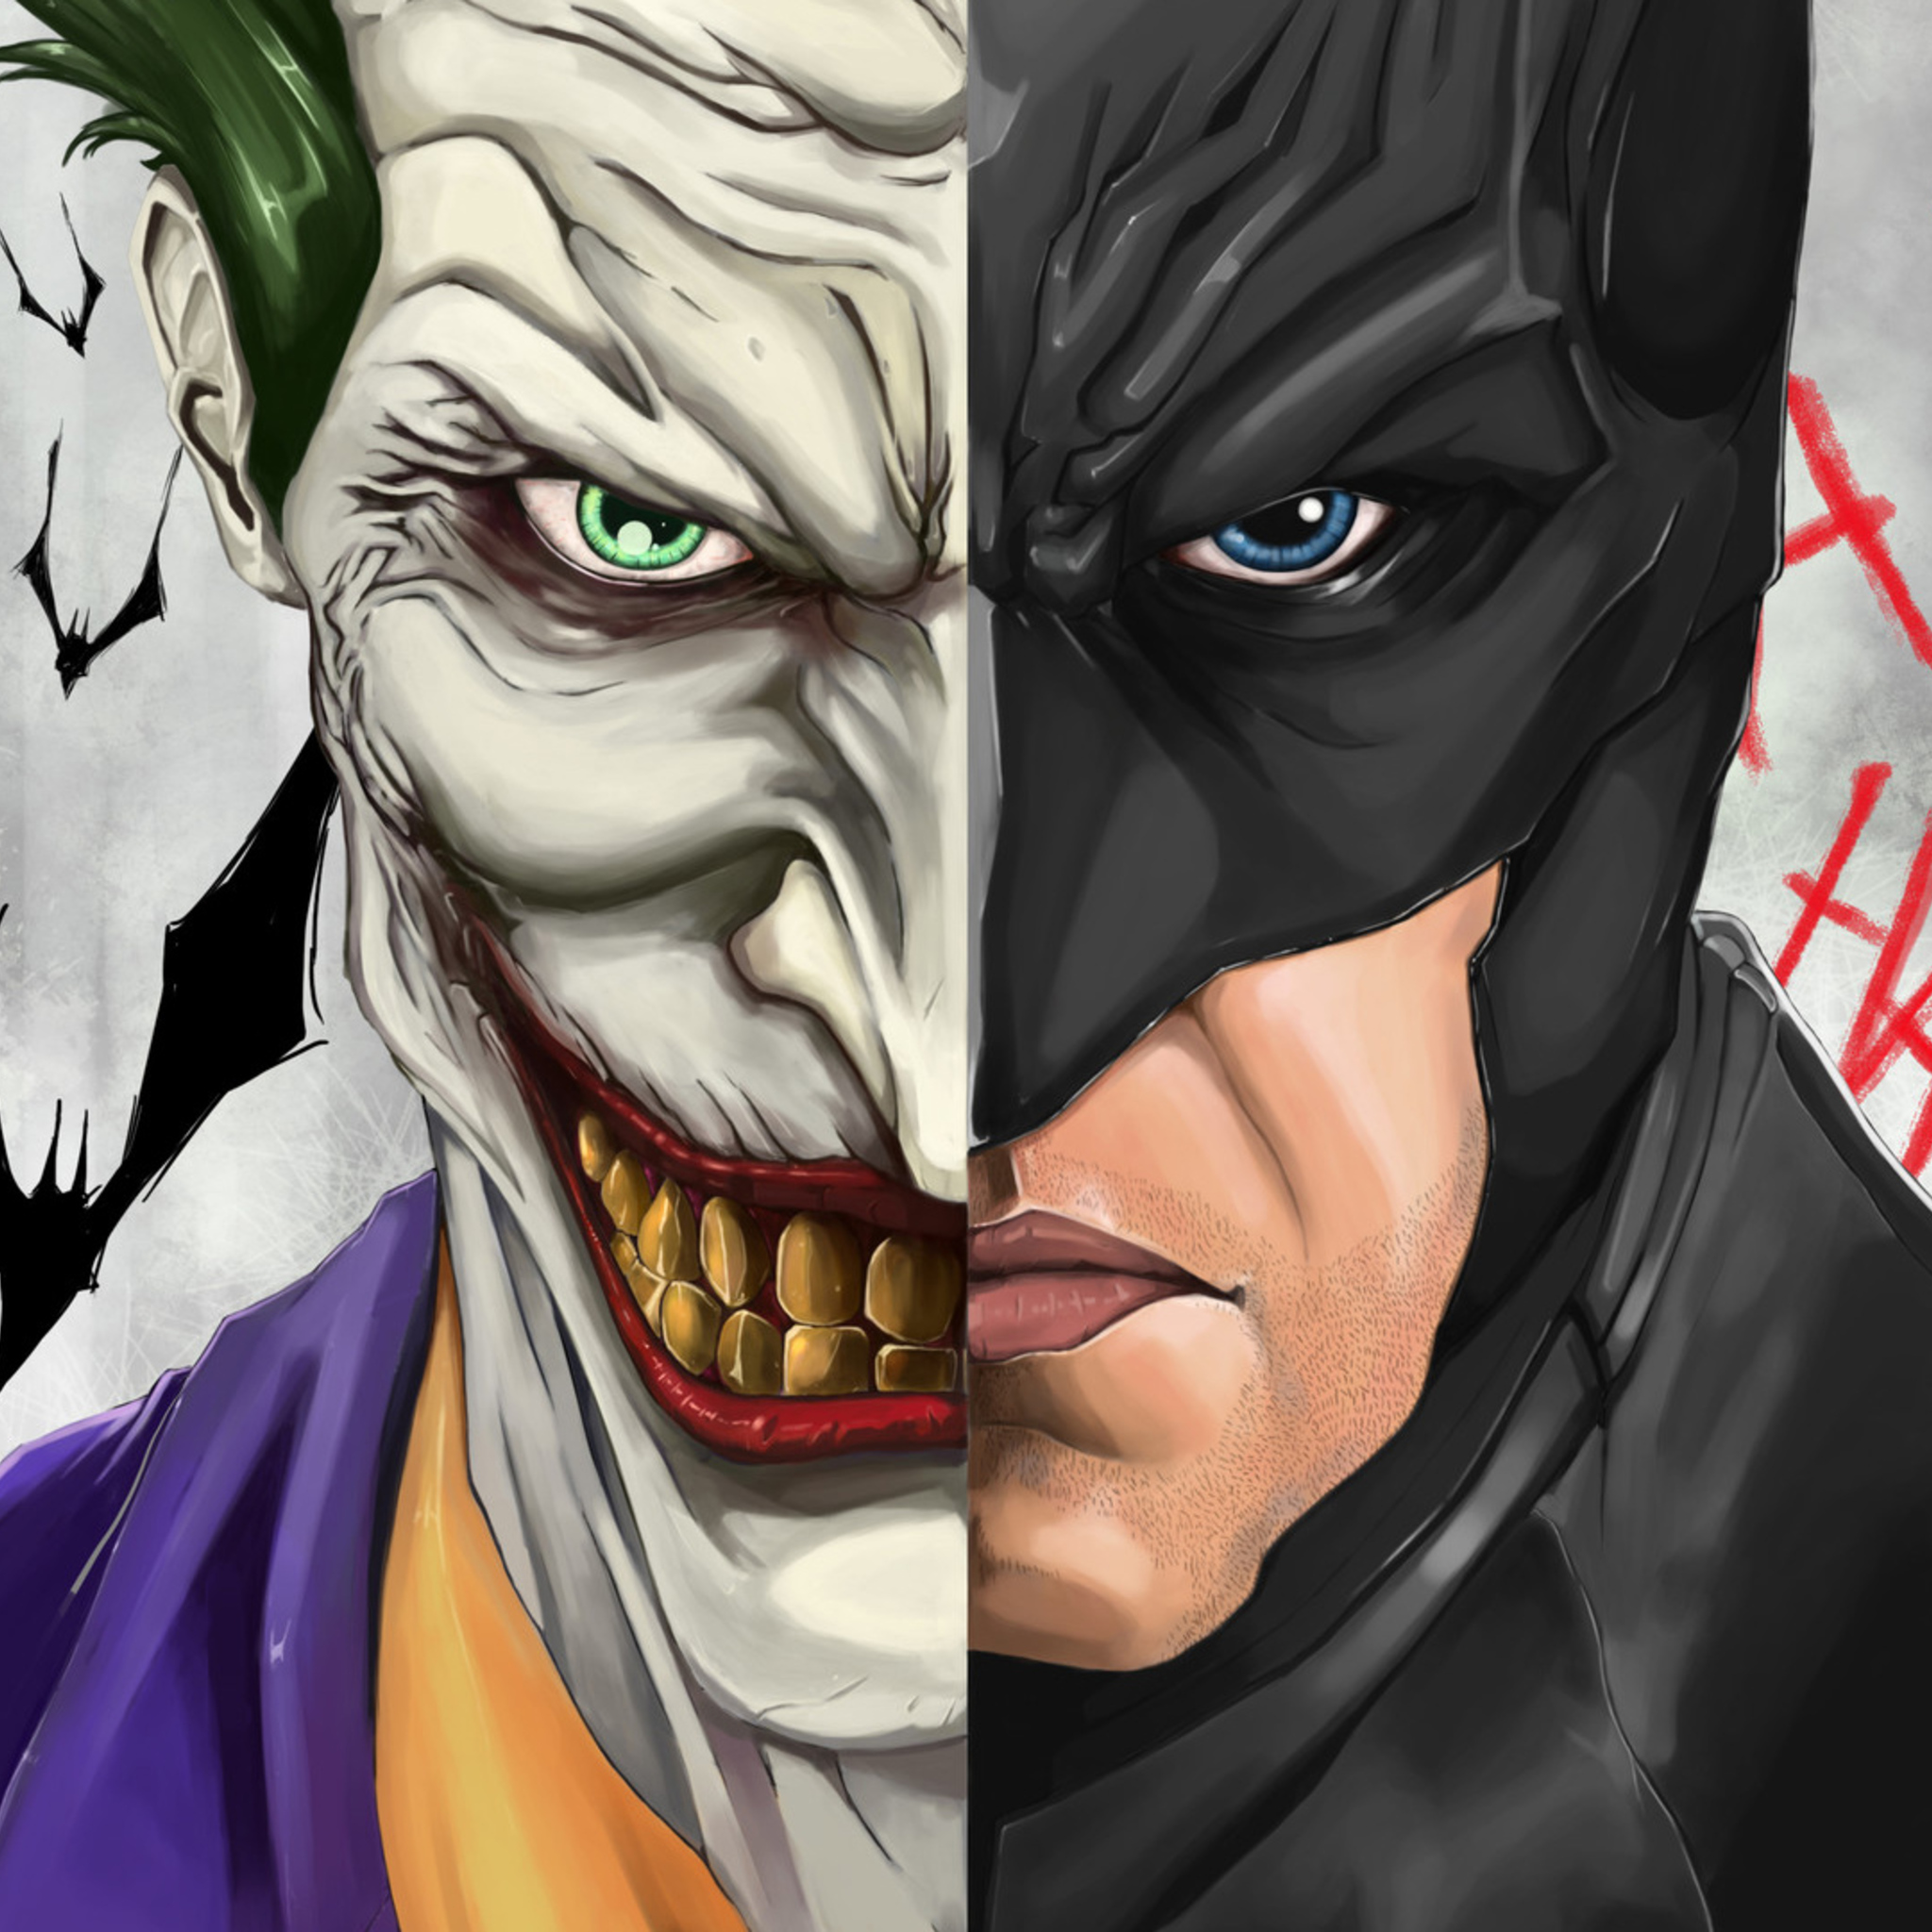 Joker And Batman In 2048x2048 Resolution. 